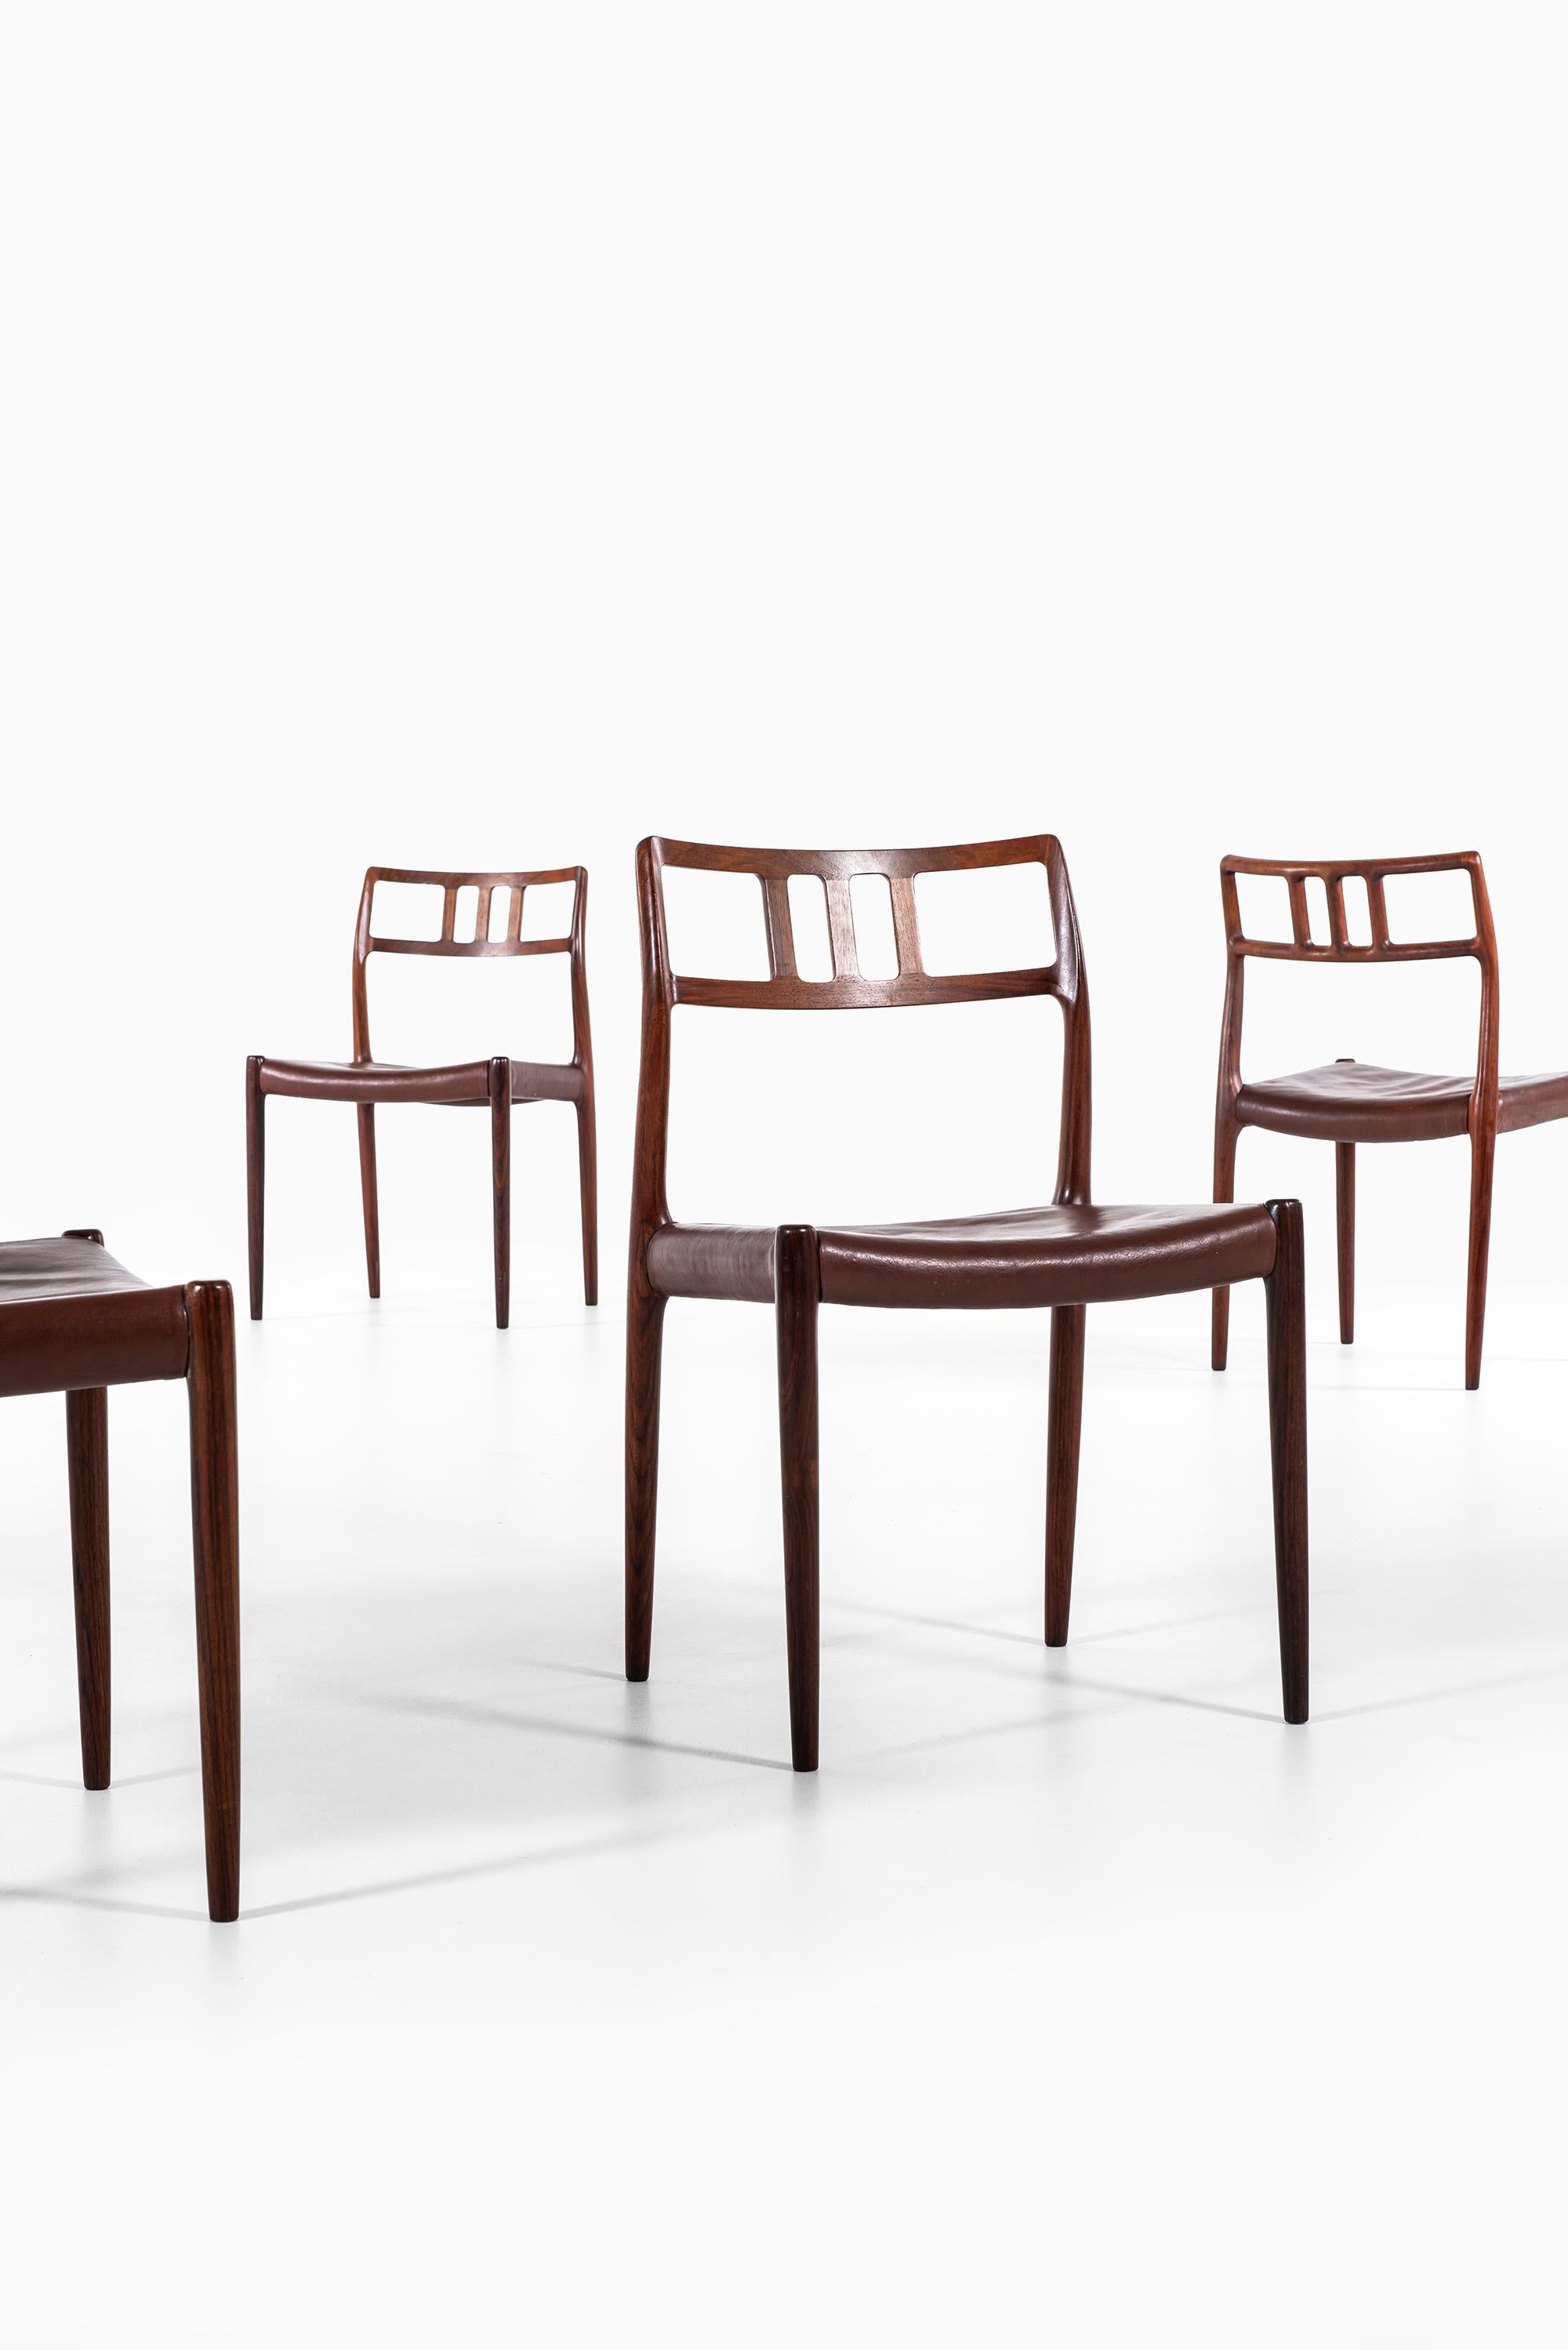 Rare set of 6 dining chairs model 79 designed by Niels O. Møller. Produced by J.L Møllers møbelfabrik in Denmark.